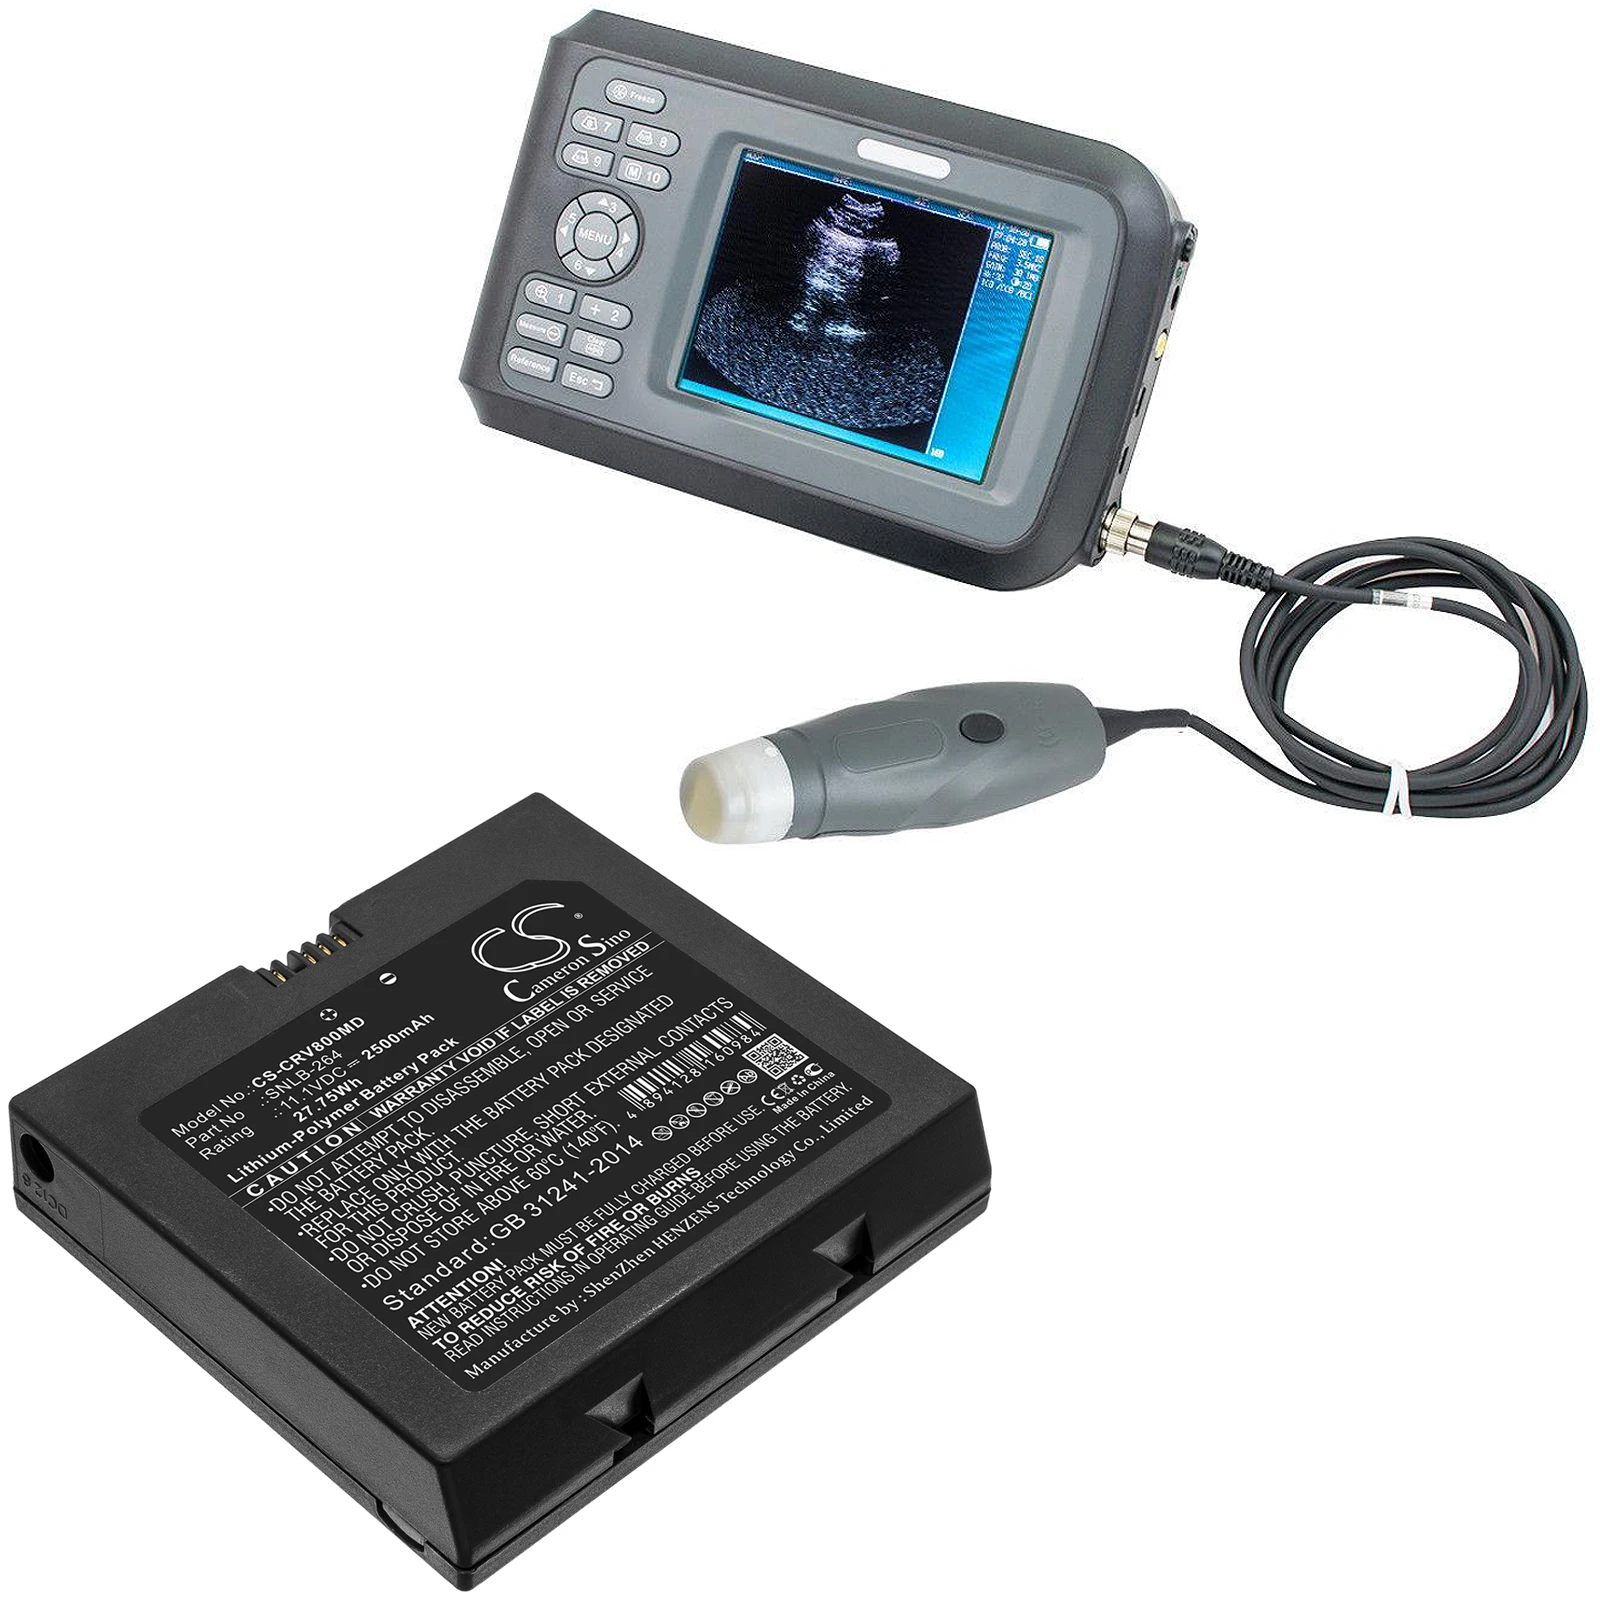 

Cameron Sino For Carejoy H8,Handheld Portable Ultrasound S,Handheld Portable Ultrasound S 2500mAh / 27.75Wh